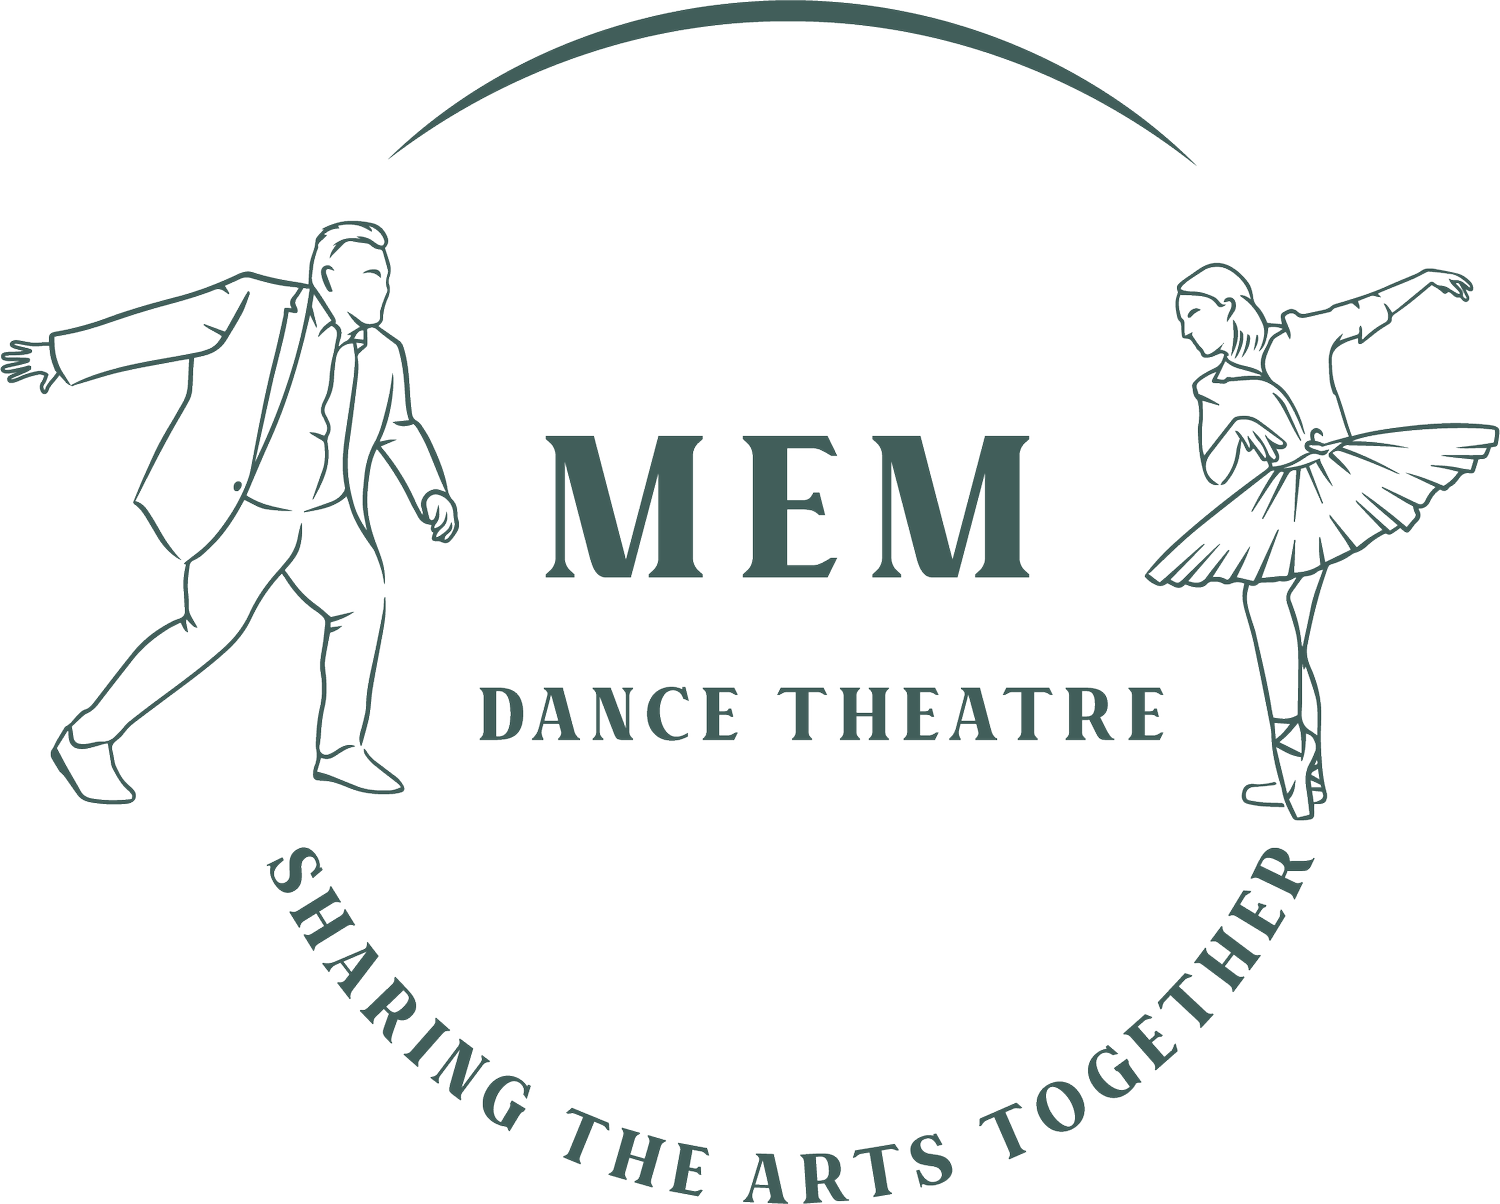 MEM Dance Theatre